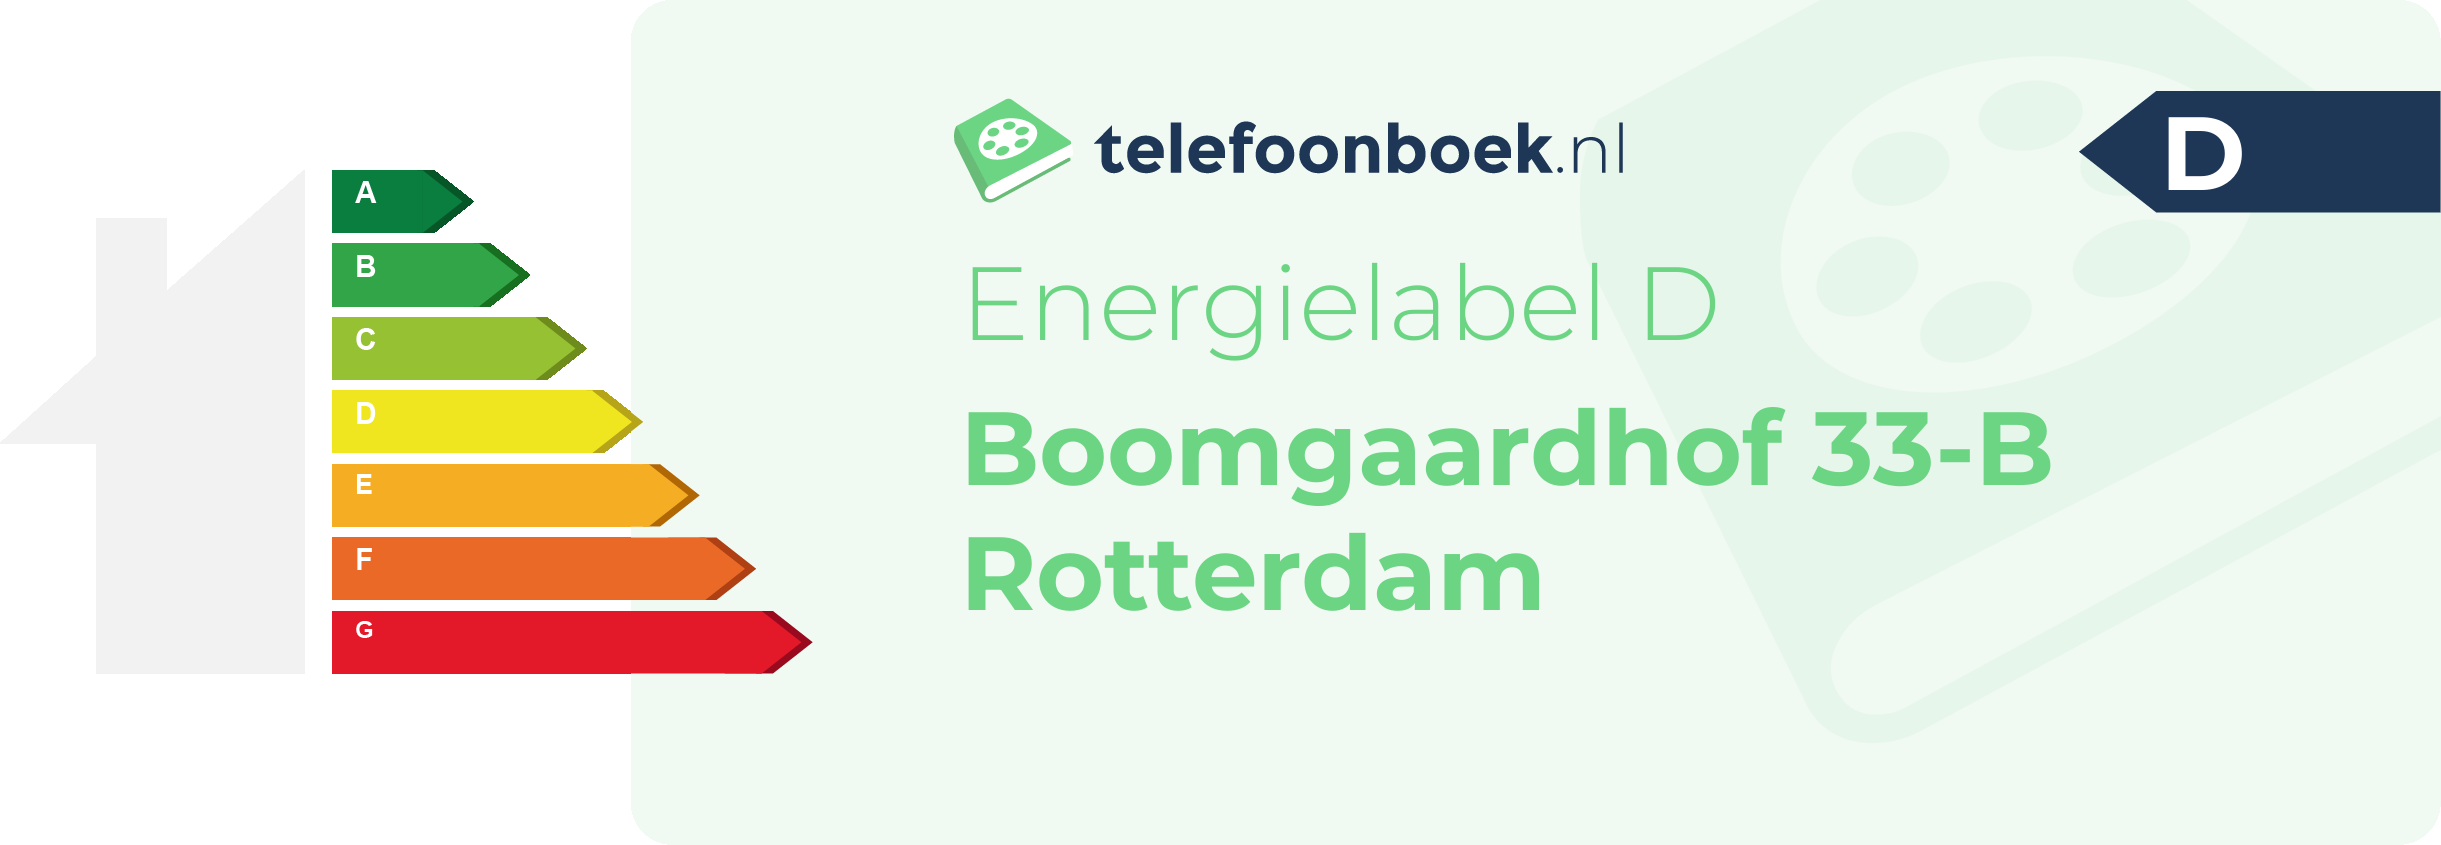 Energielabel Boomgaardhof 33-B Rotterdam